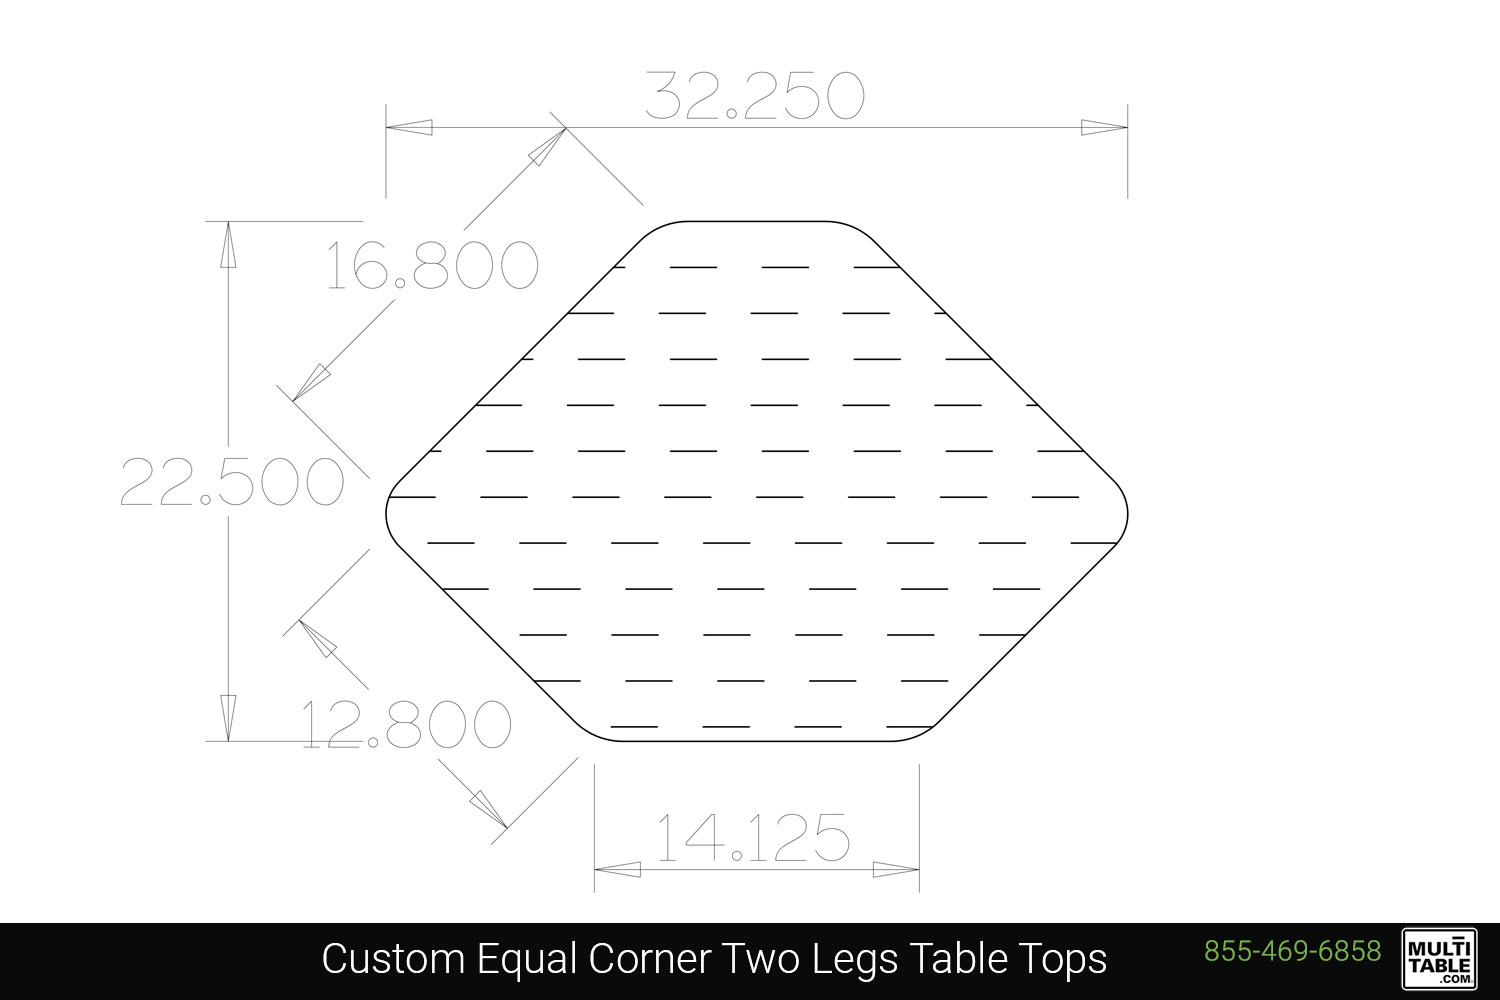 Custom Equal Corner Two Legs Table Tops Shapes MultiTable Office Furniture Manufacturing Phoenix Arizona Since 2010